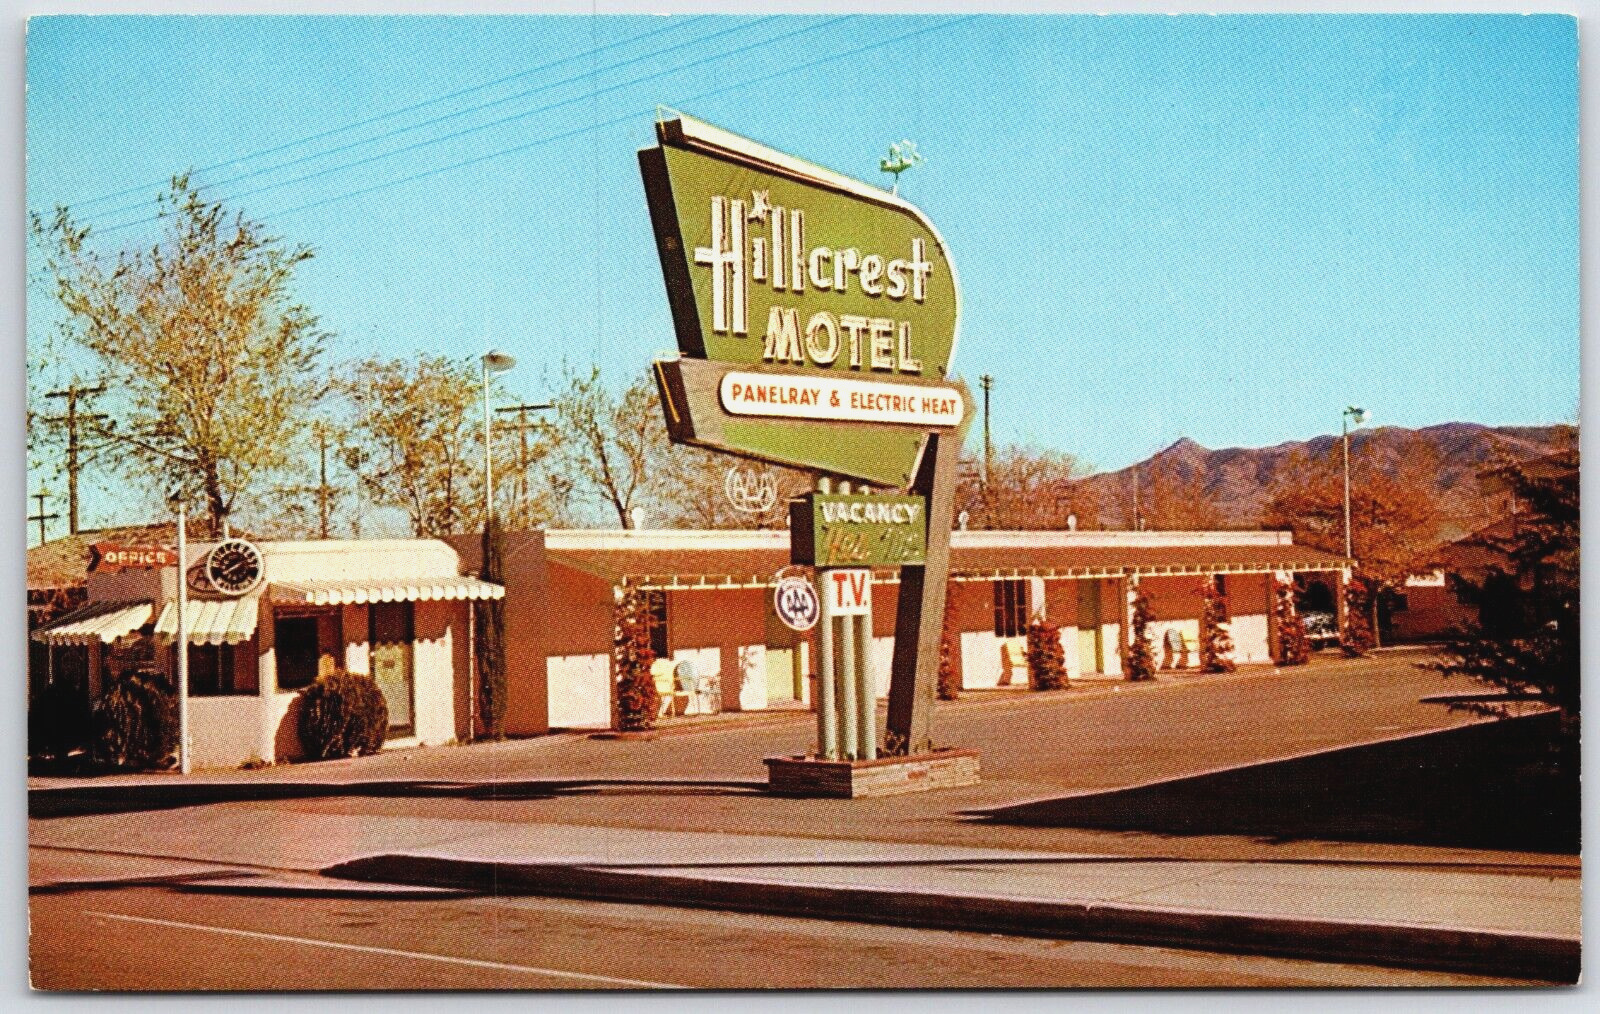 AZ Kingham ROUTE 66 Hillcrest Motel & Sign Panelray electric heat postcard